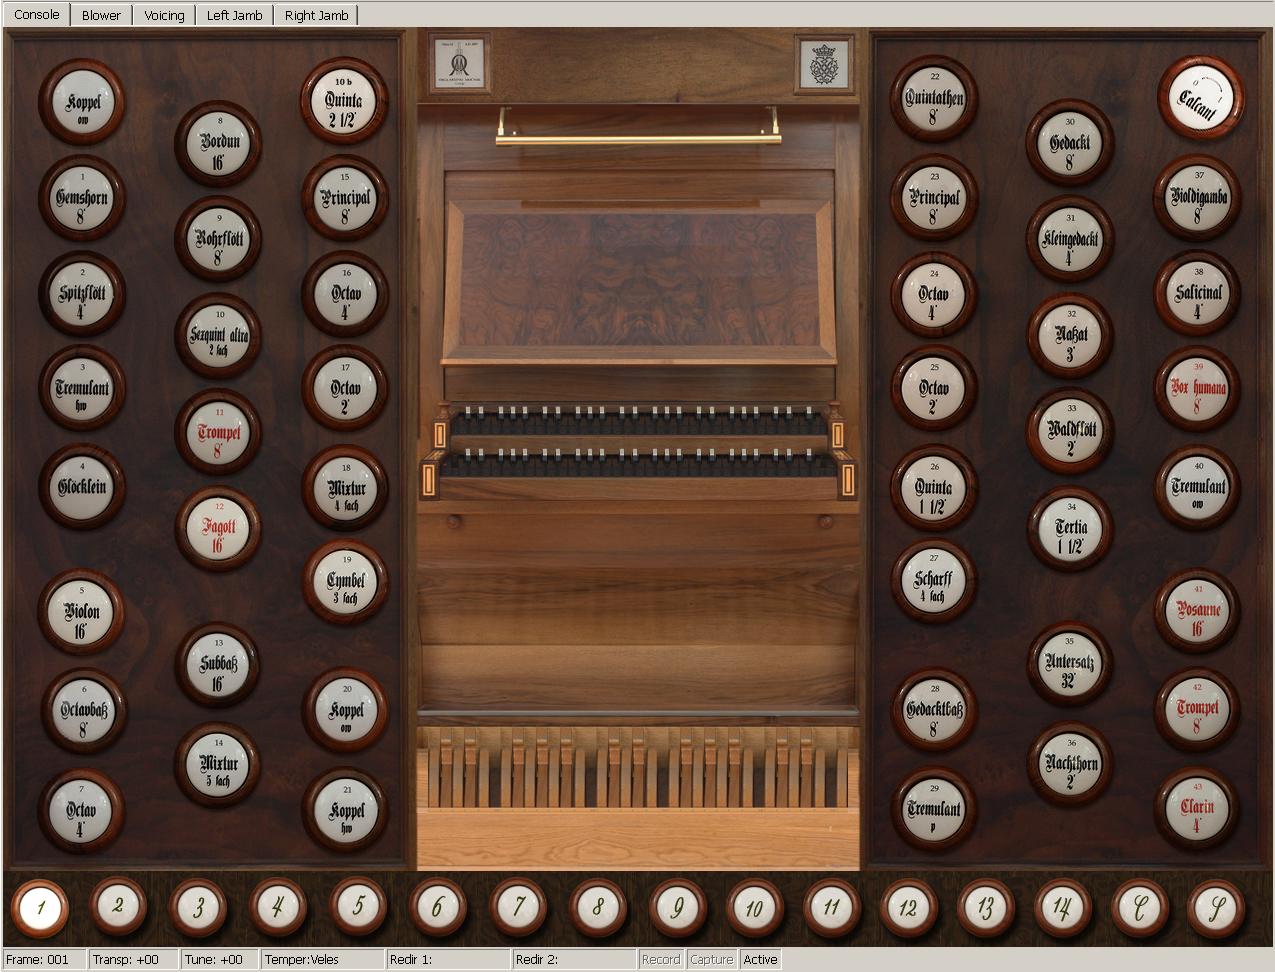 Hauptwerk sample set Marcussen organ